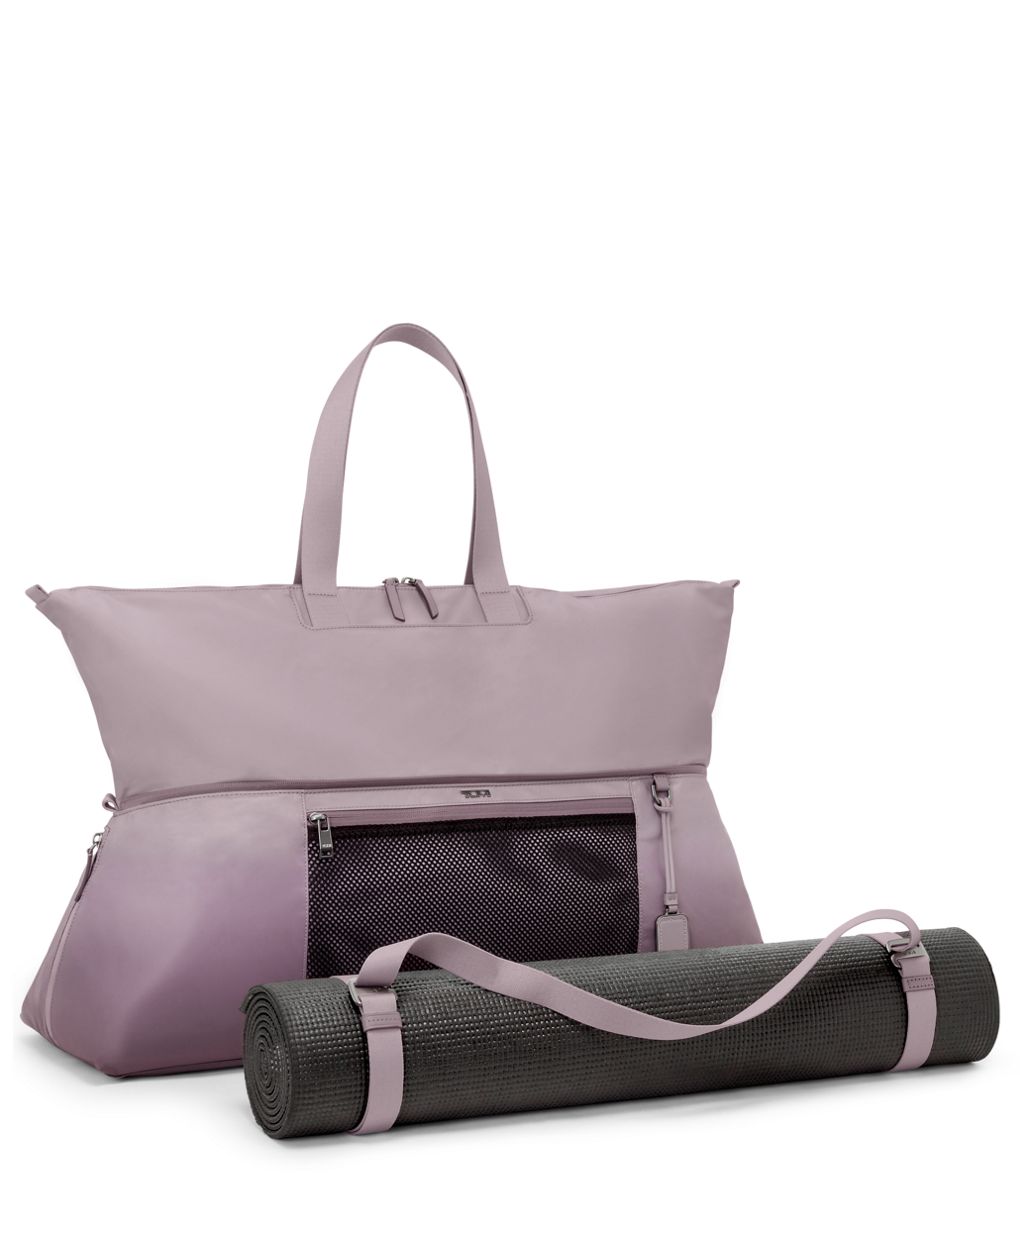 ULTLAT Yoga Mat Bag with Adjustable Shoulder Strap and Yoga Mat